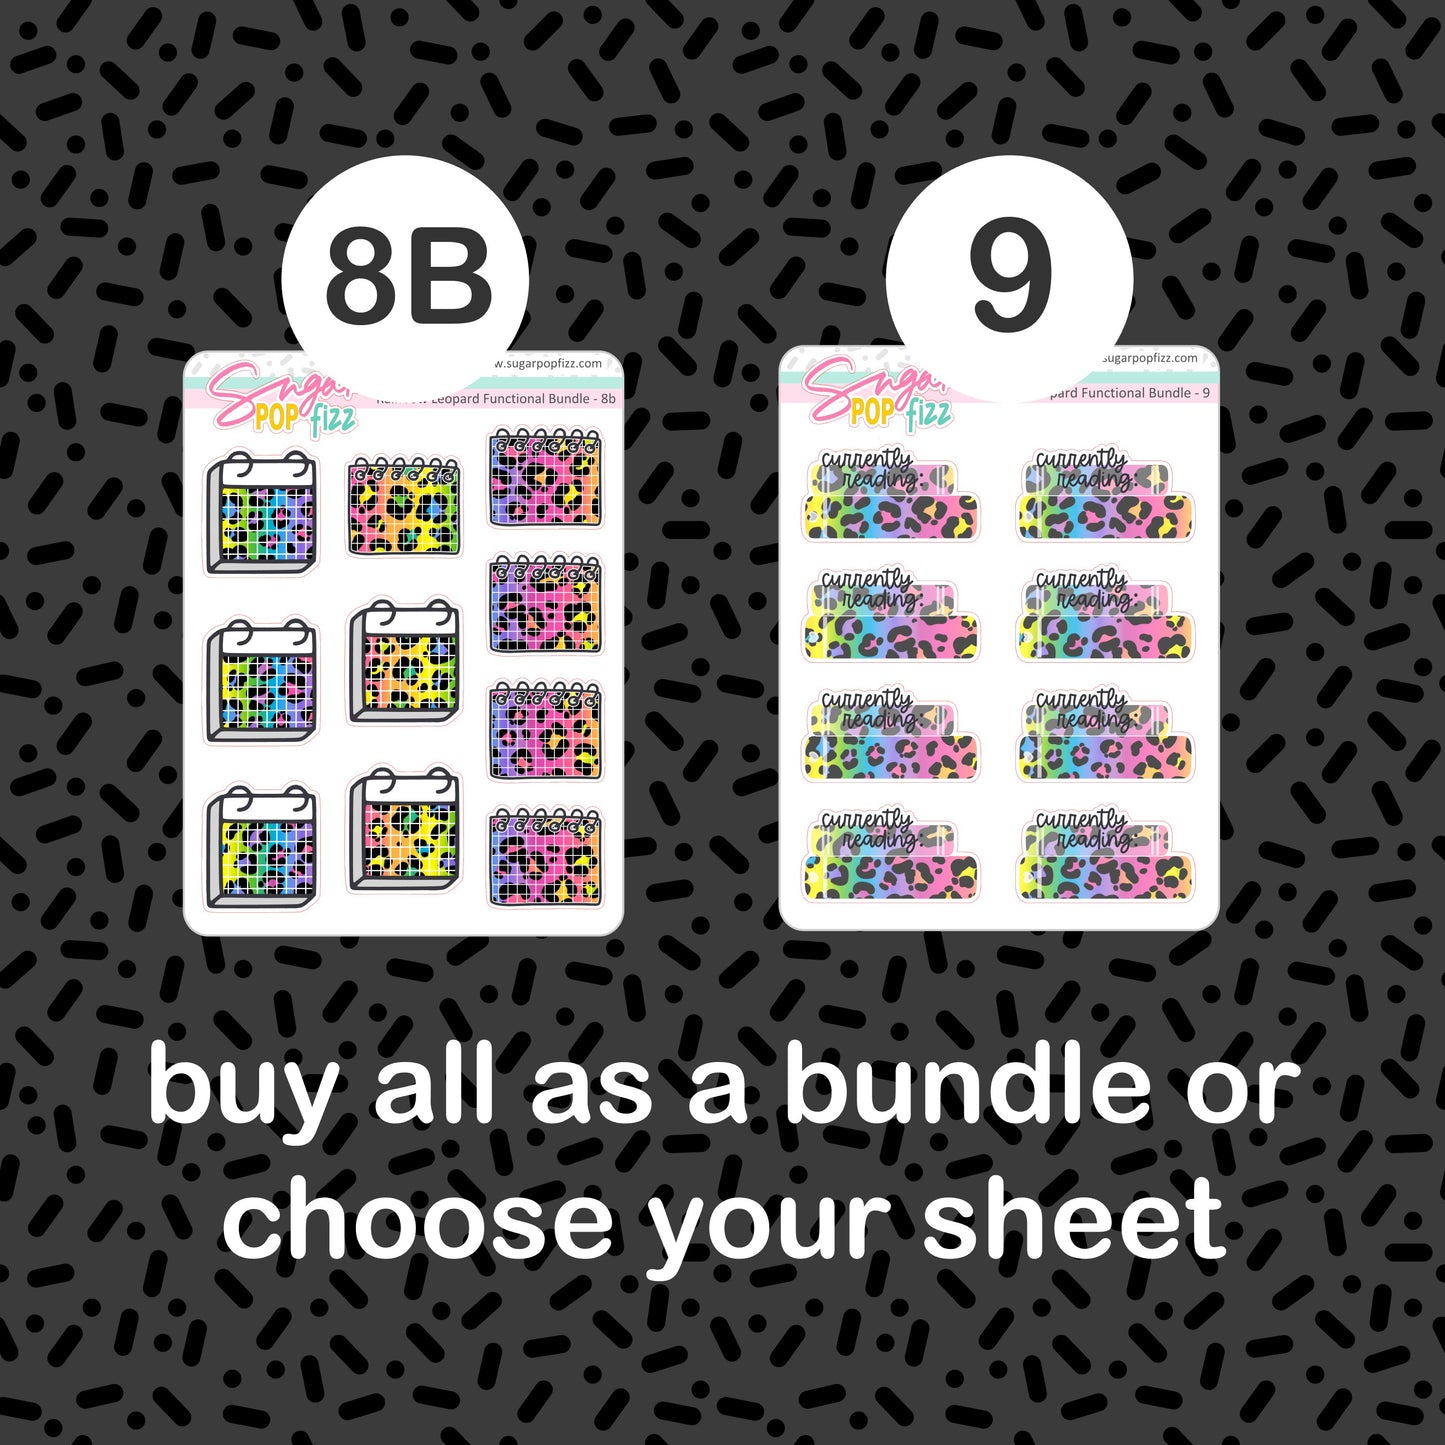 Rainbow Leopard Functional Bundle - choose your sheet